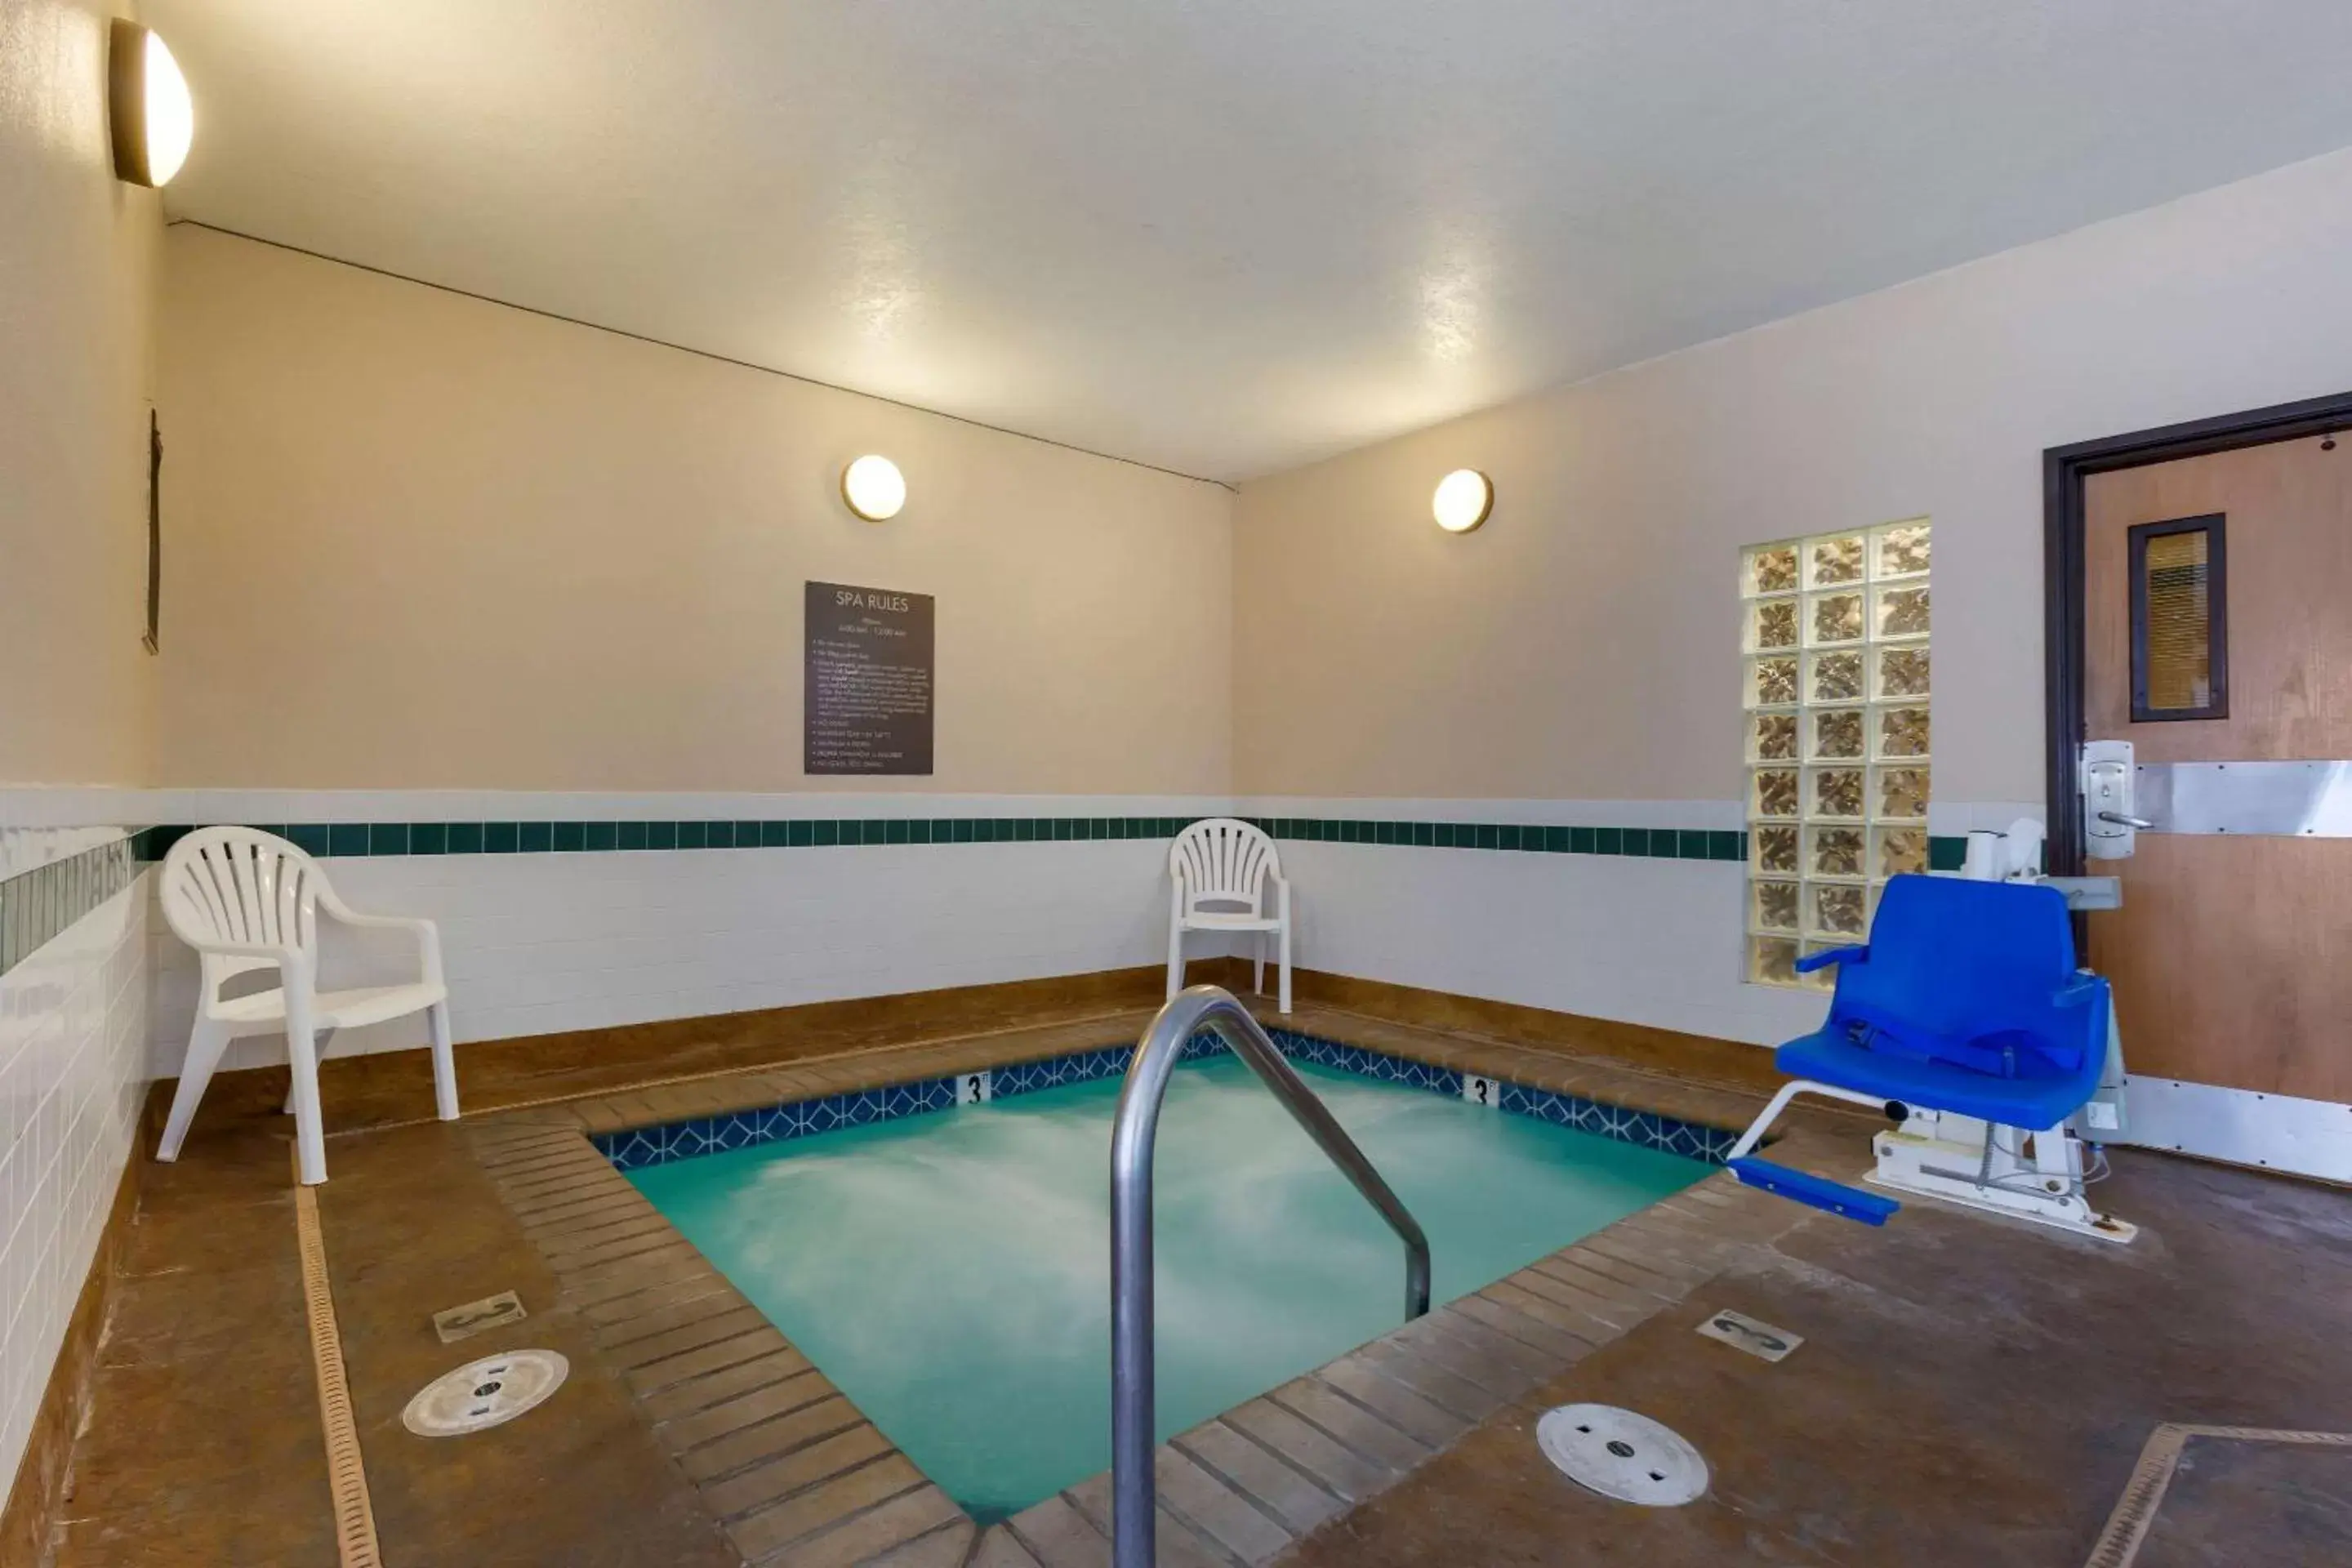 Activities, Swimming Pool in Comfort Inn South-Medford